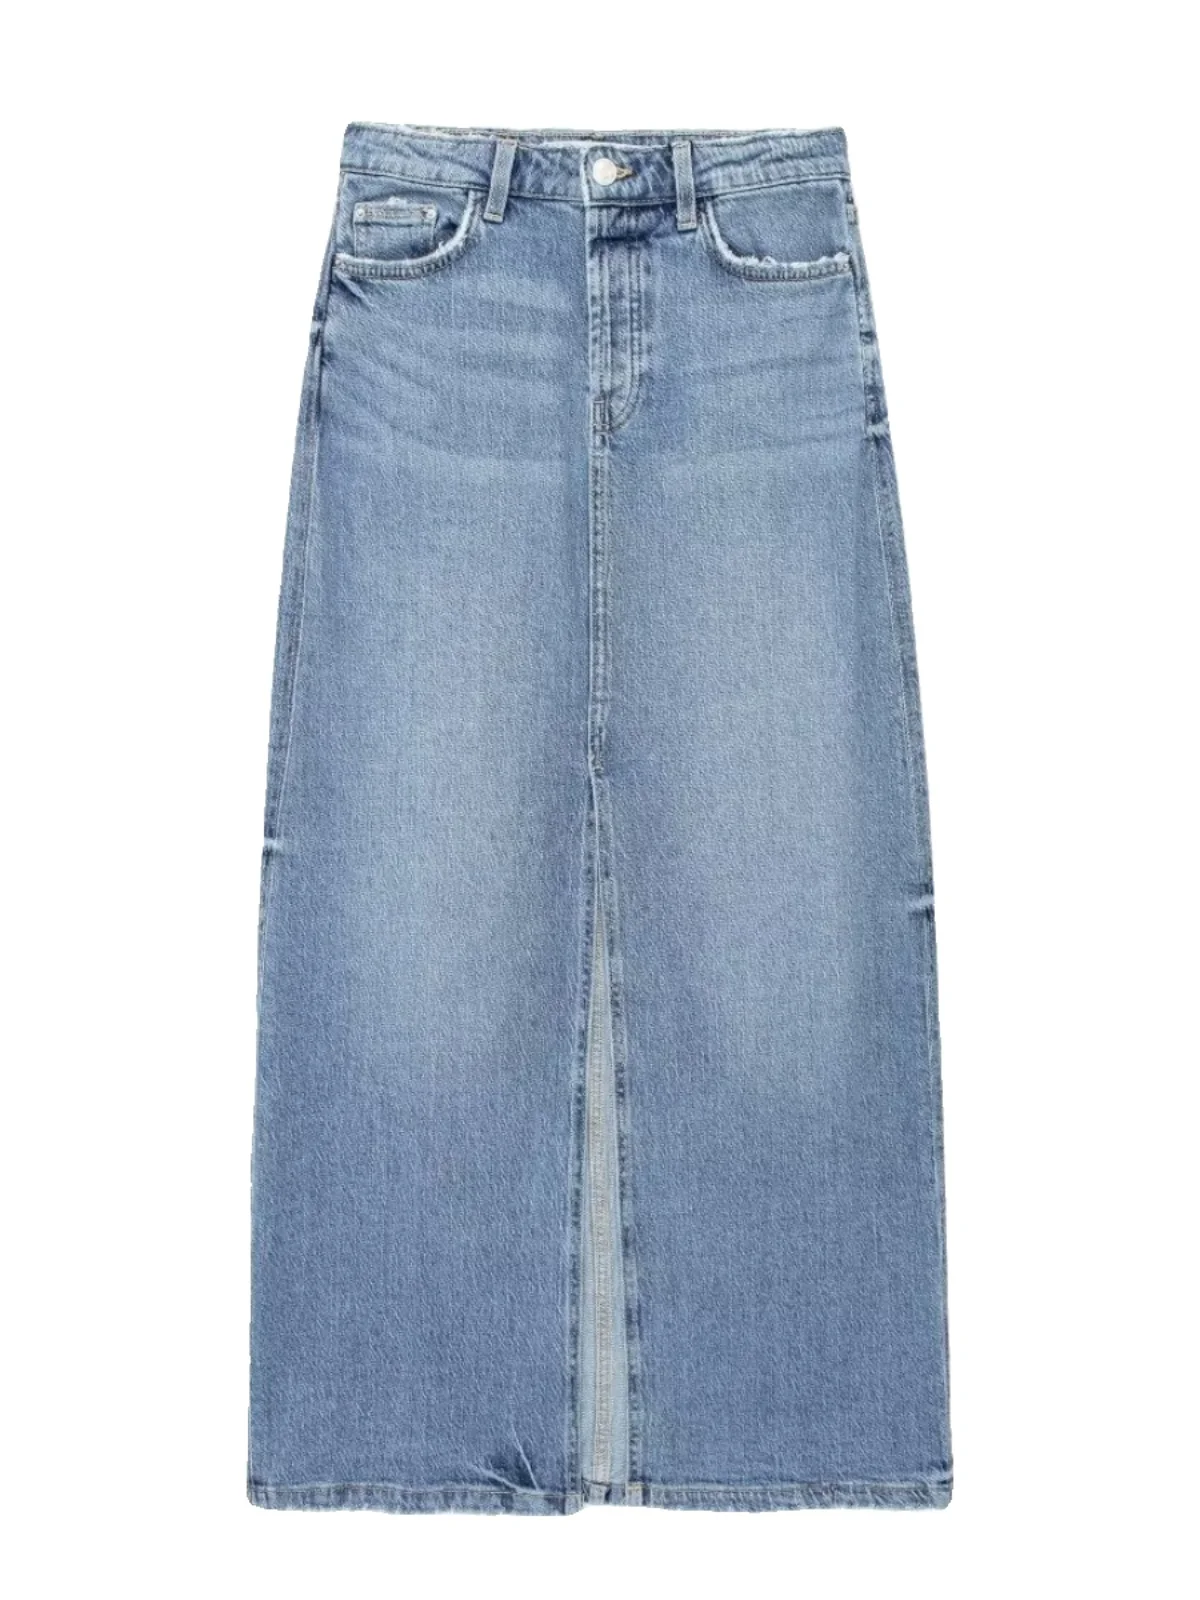 

High Waist Women Denim Skirt Spring Summer Washed Blue Solid Color Split Jean Skirt Casual Female Wrap Hip Skirt